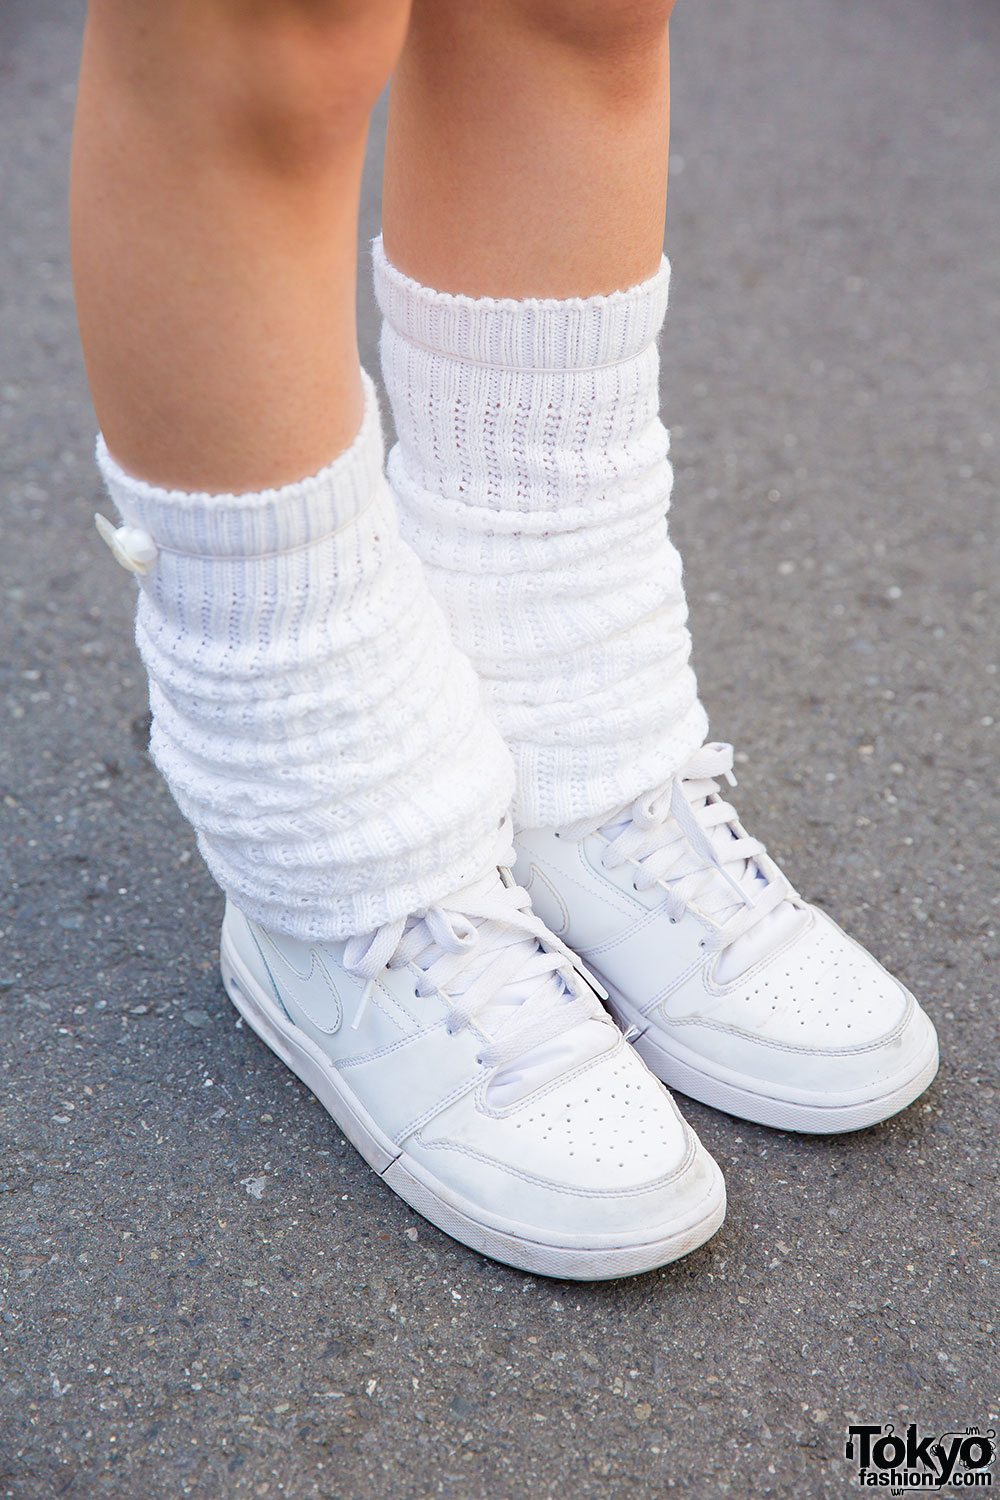 Persona enferma Antagonista Finalmente Nike sneakers and leg warmers – Tokyo Fashion